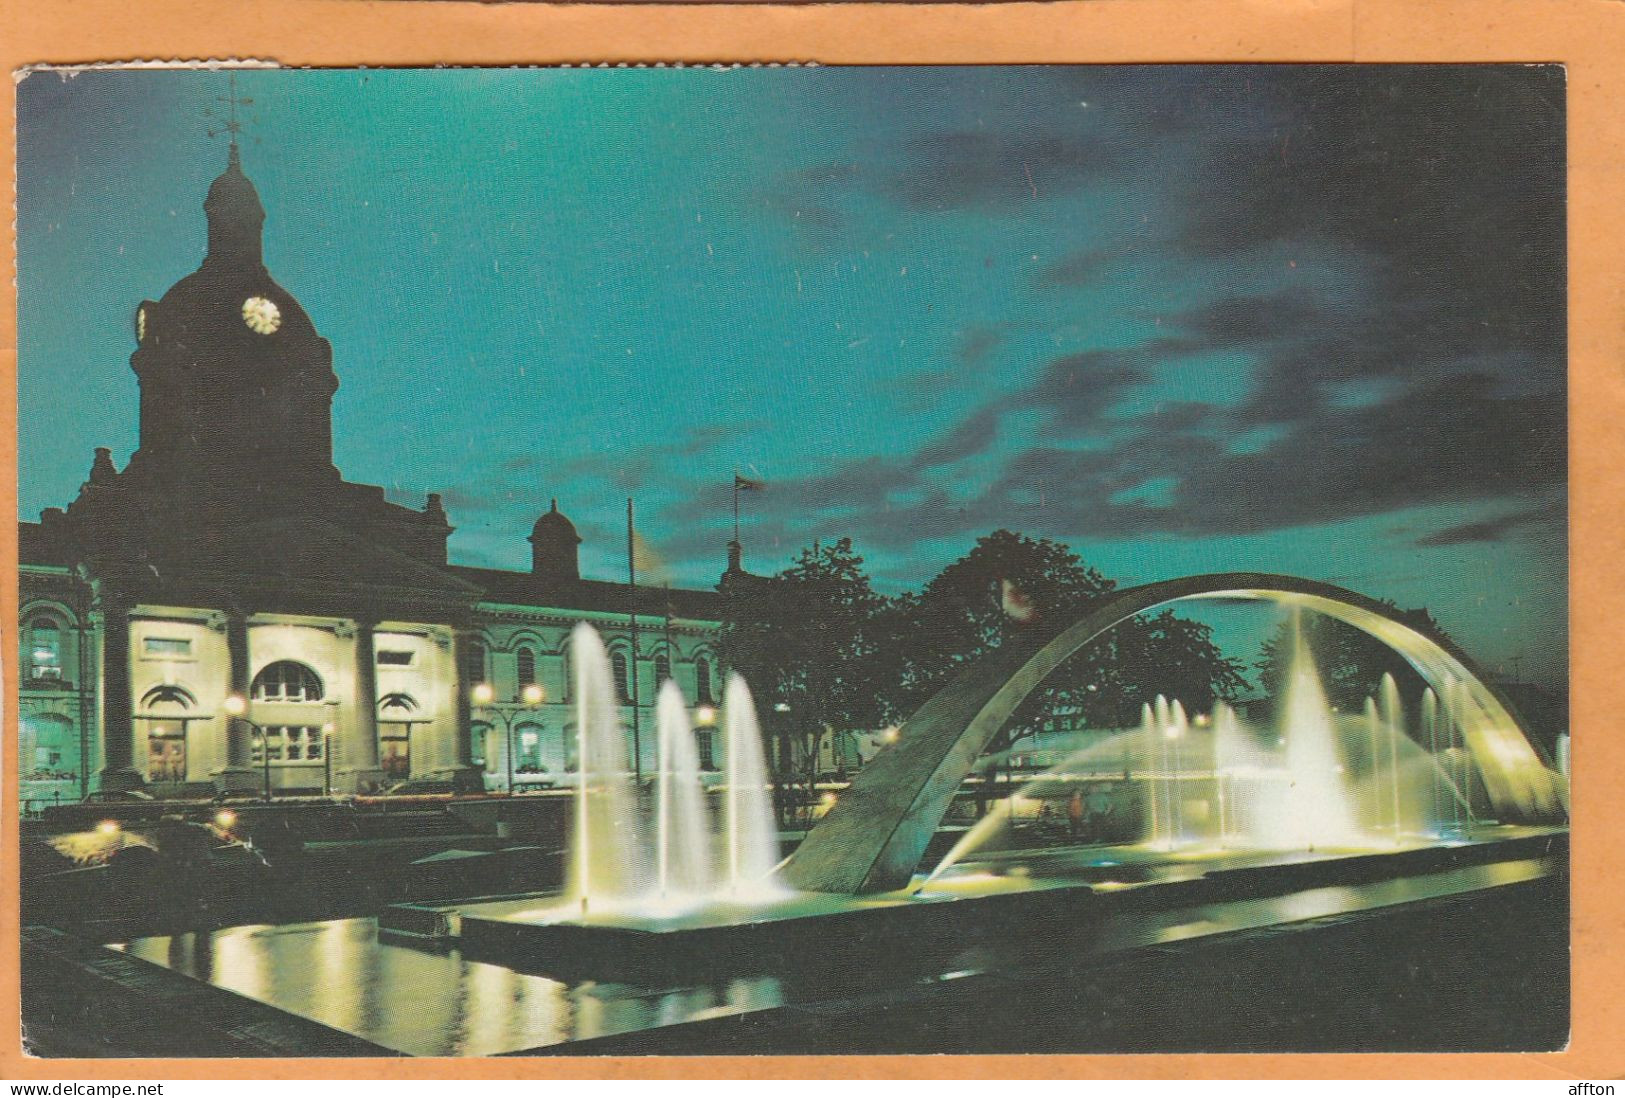 Kingston Ontario Canada Old Postcard - Kingston